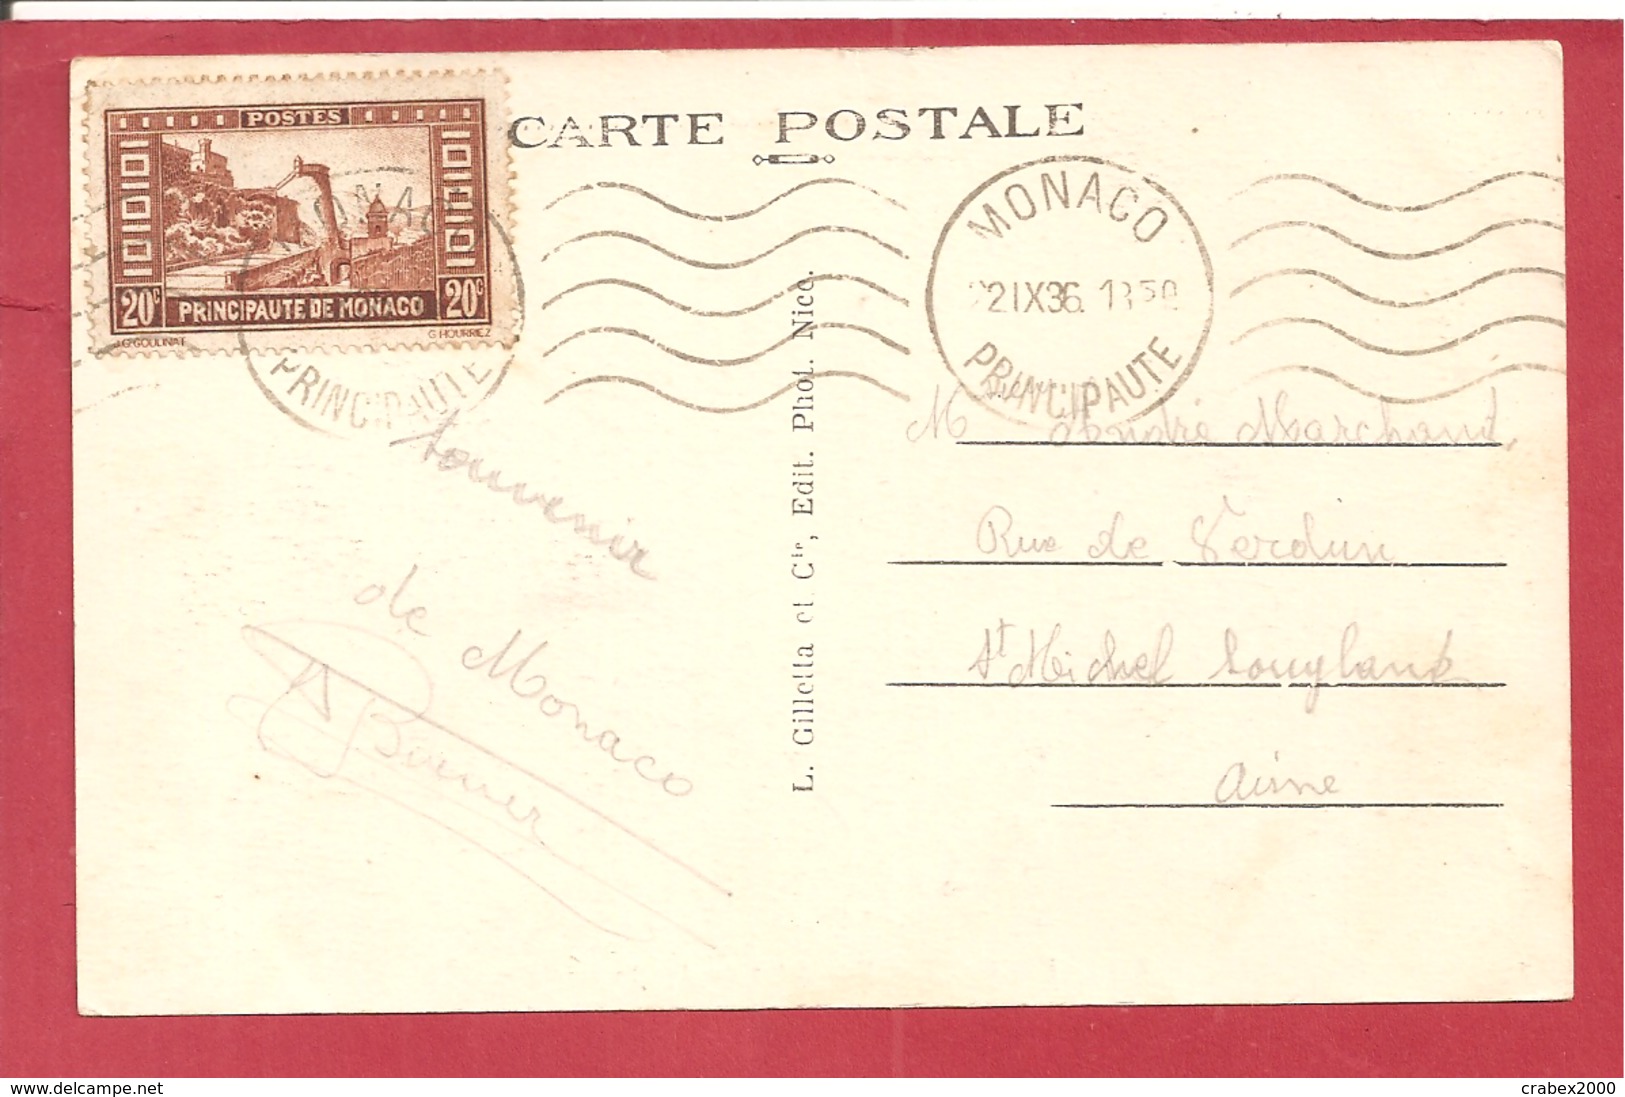 Y&T N°120  MONTE CARLO   Vers FRANCE  1936 VOIR LES 2 SCANS - Lettres & Documents